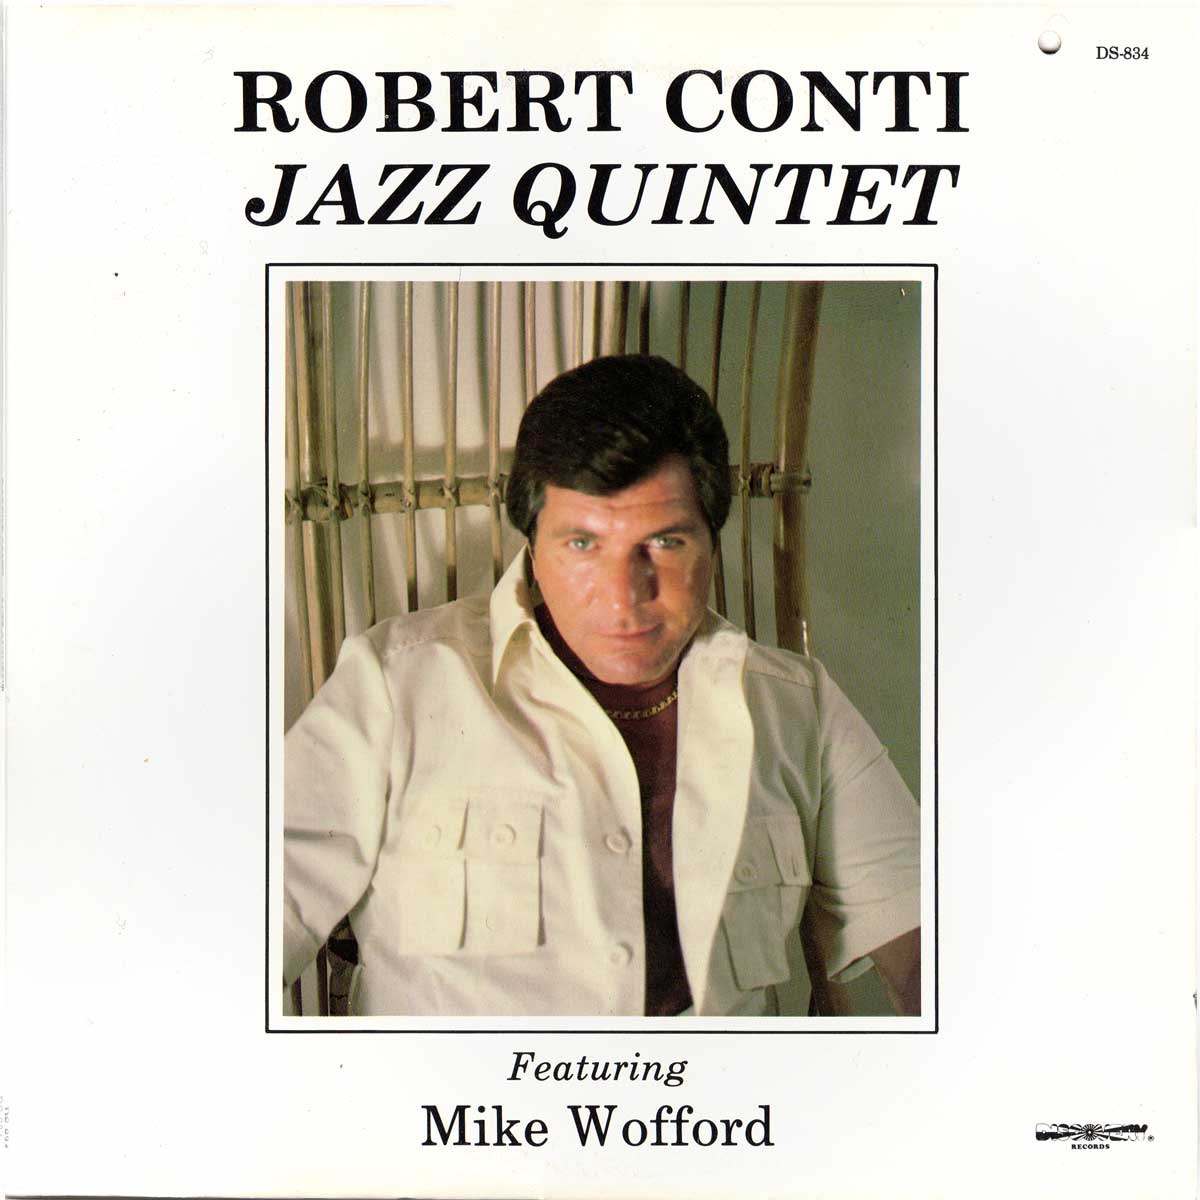 Robert Conti - Jazz Quintet - Front cover